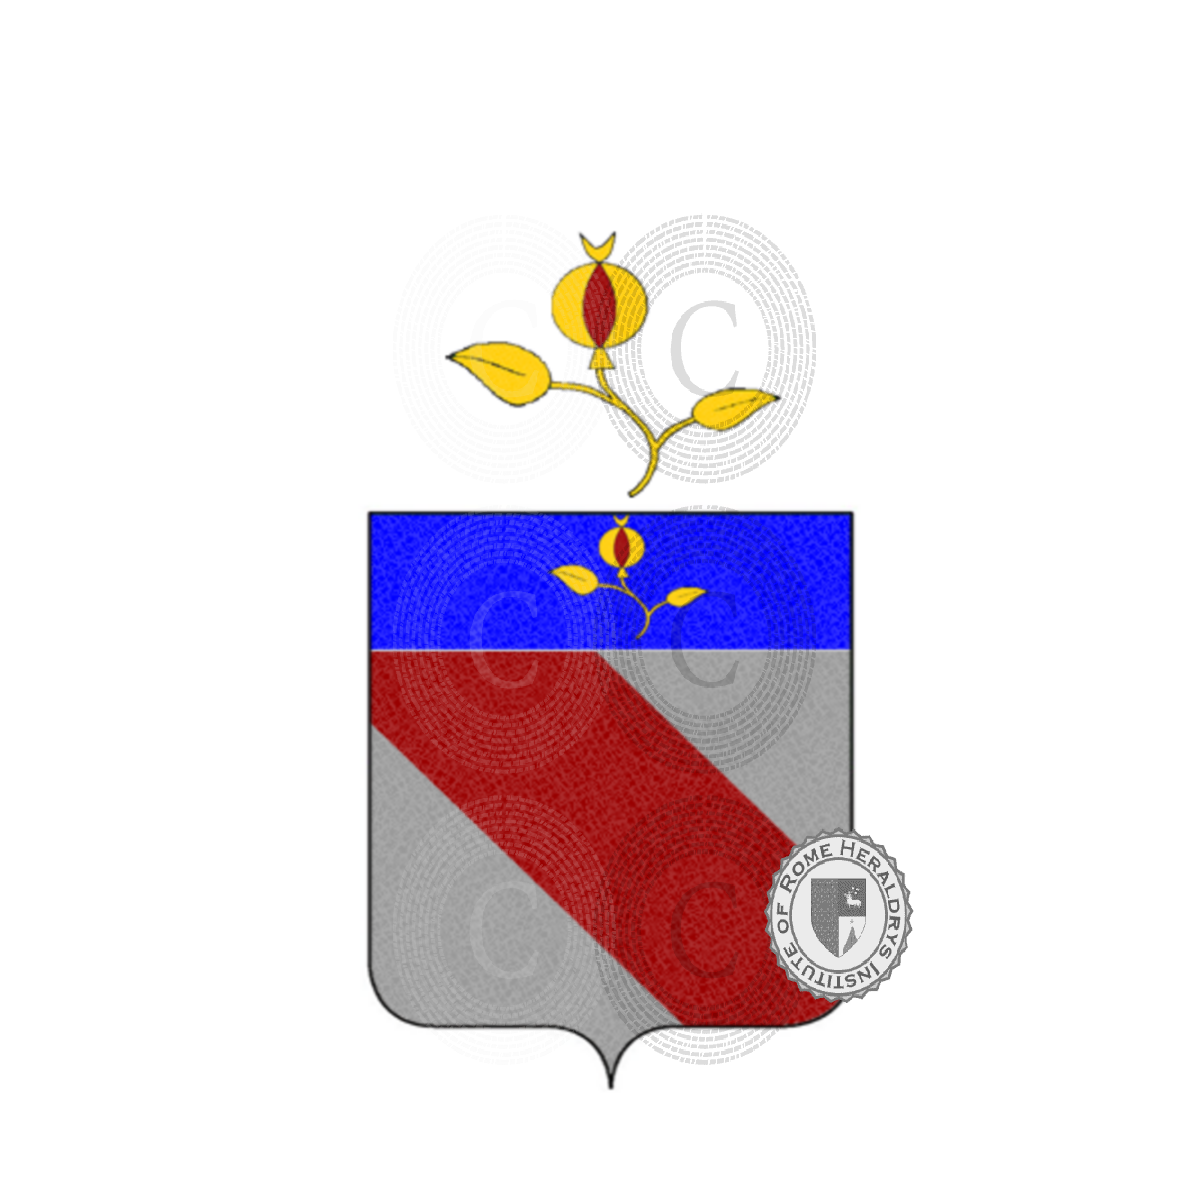 Coat of arms of familyvercellino        